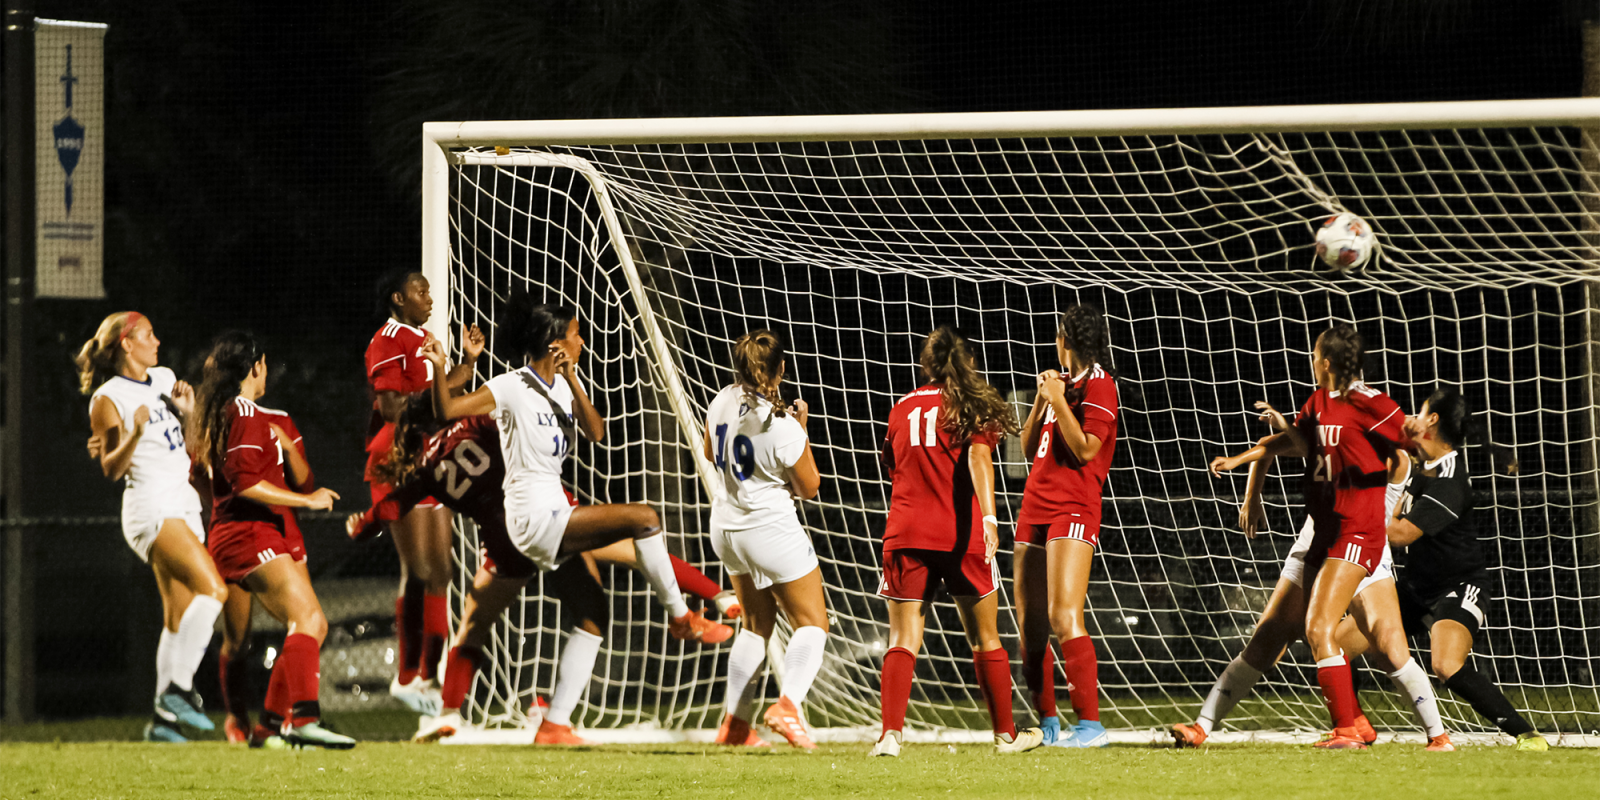 FNU women's soccer player against Lynn University